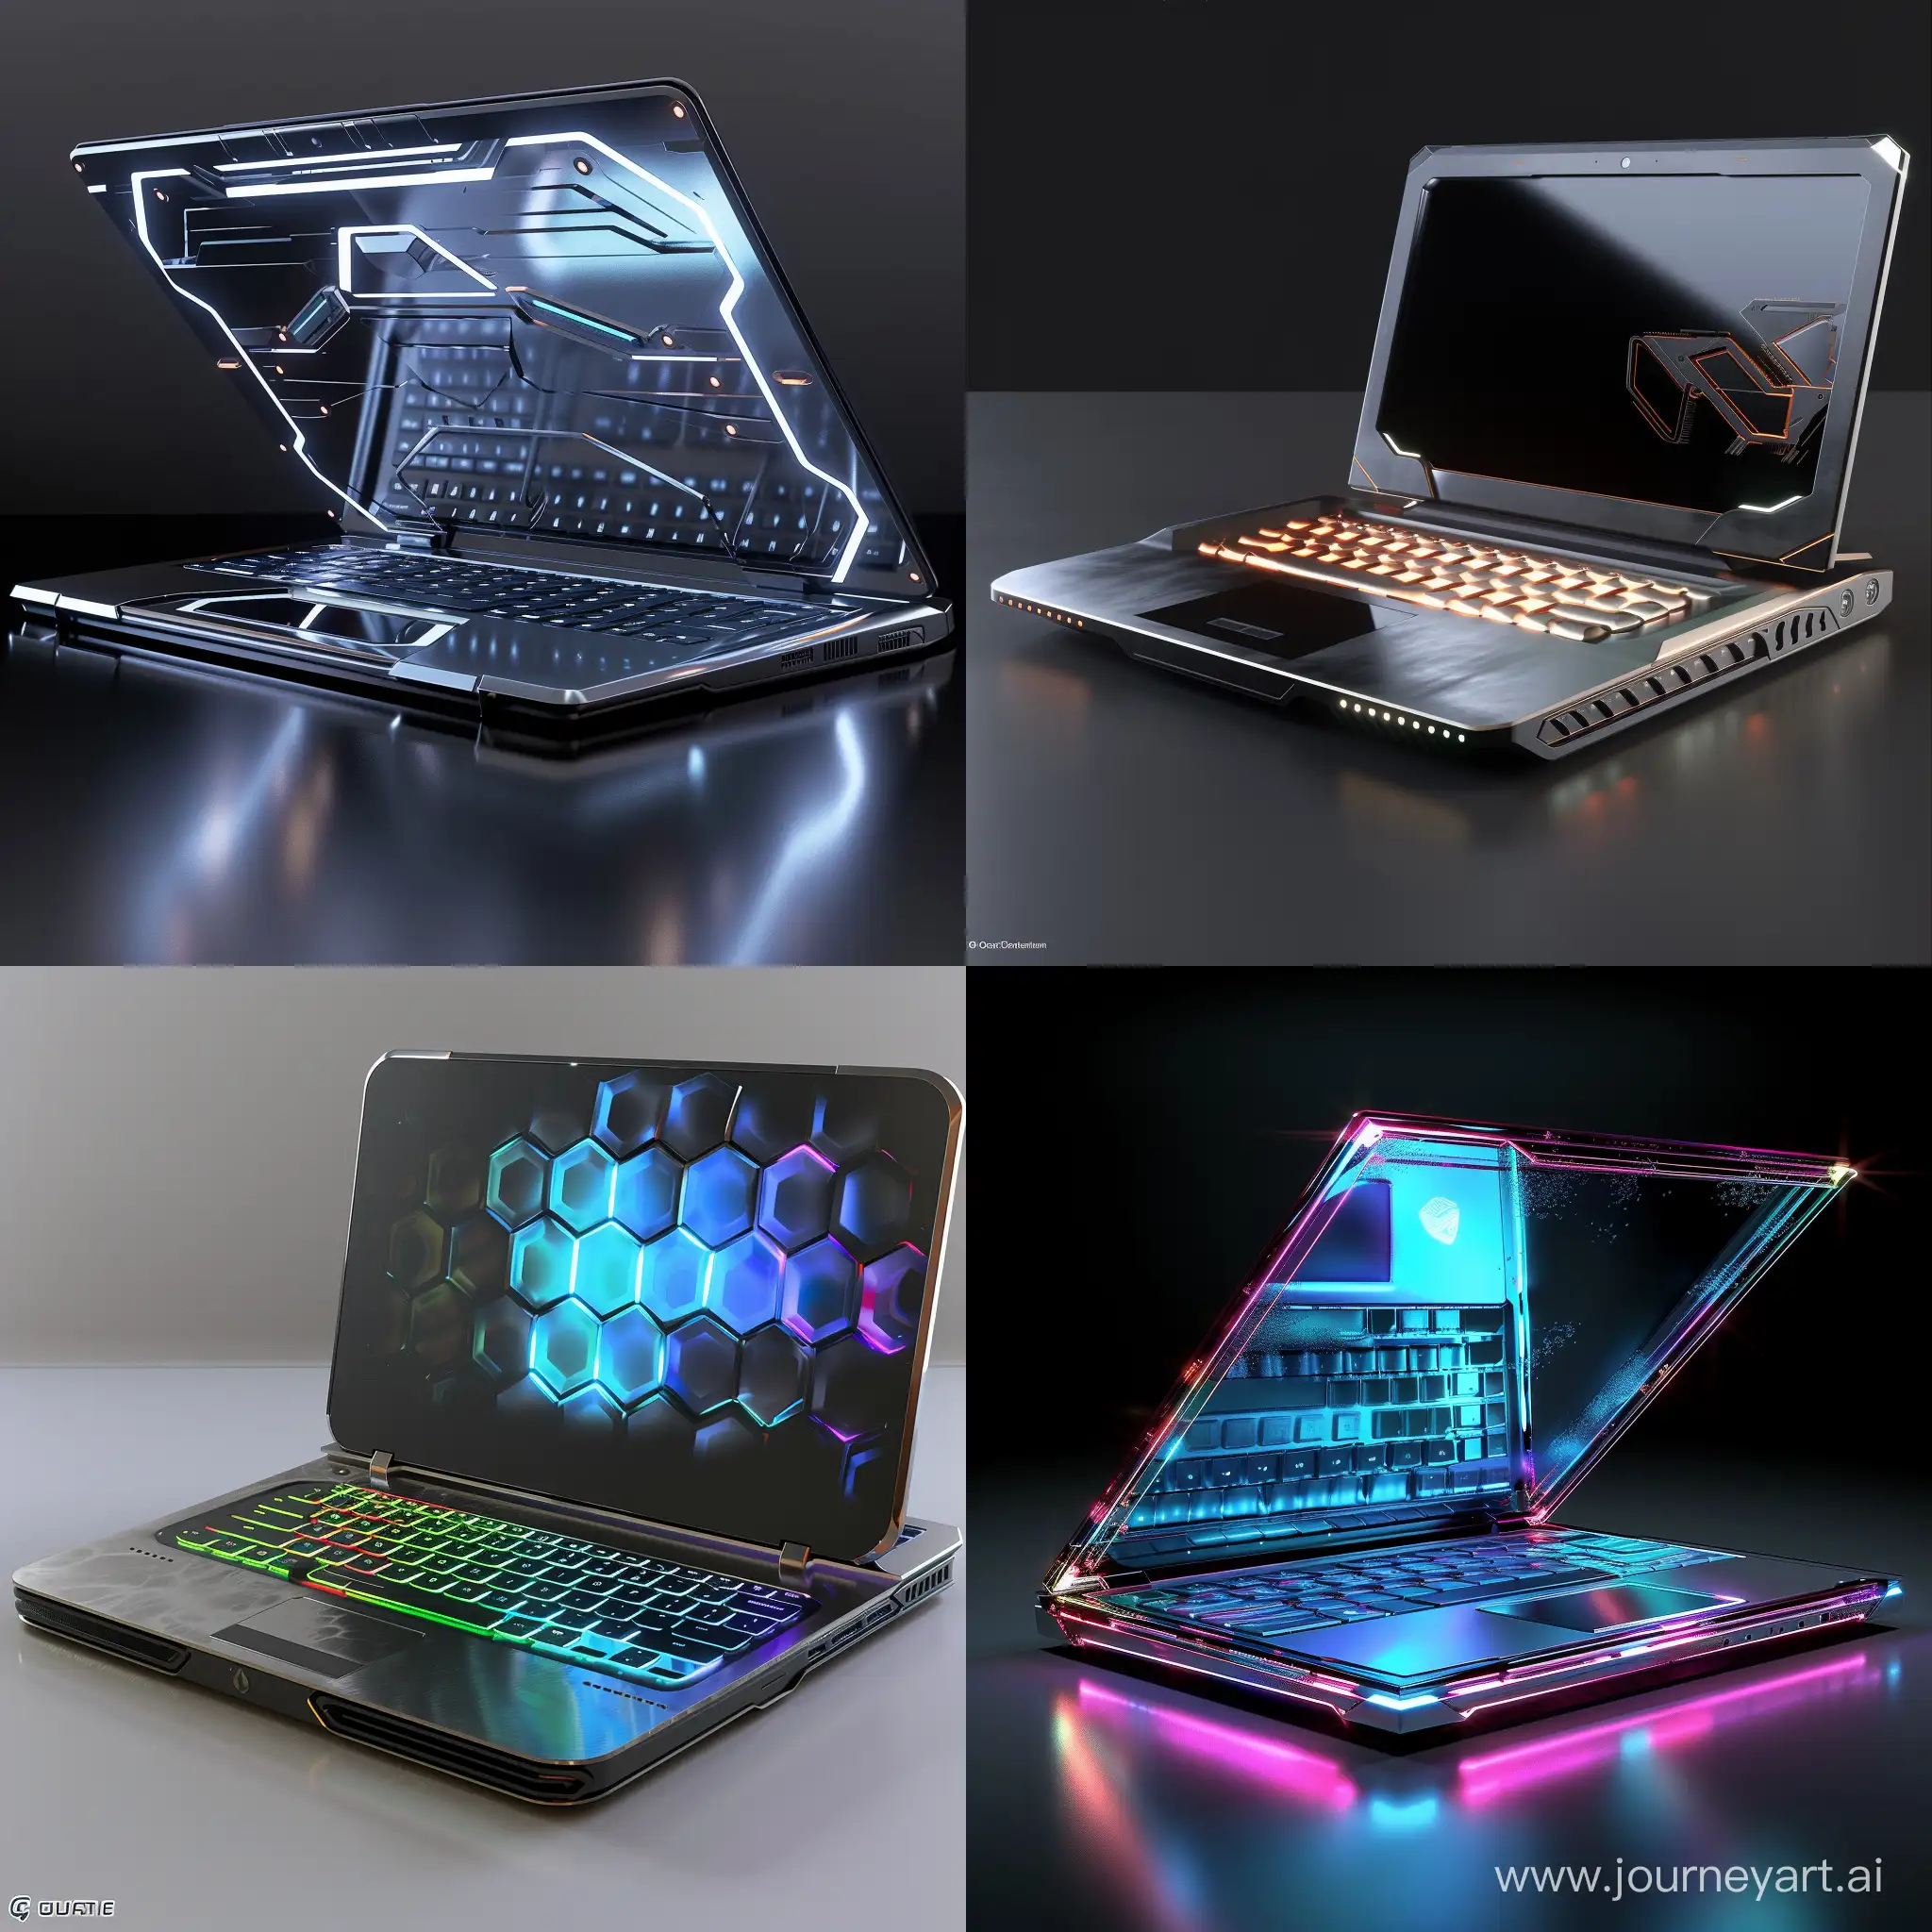 Futuristic-Laptop-with-Composite-Metals-3D-Rendering